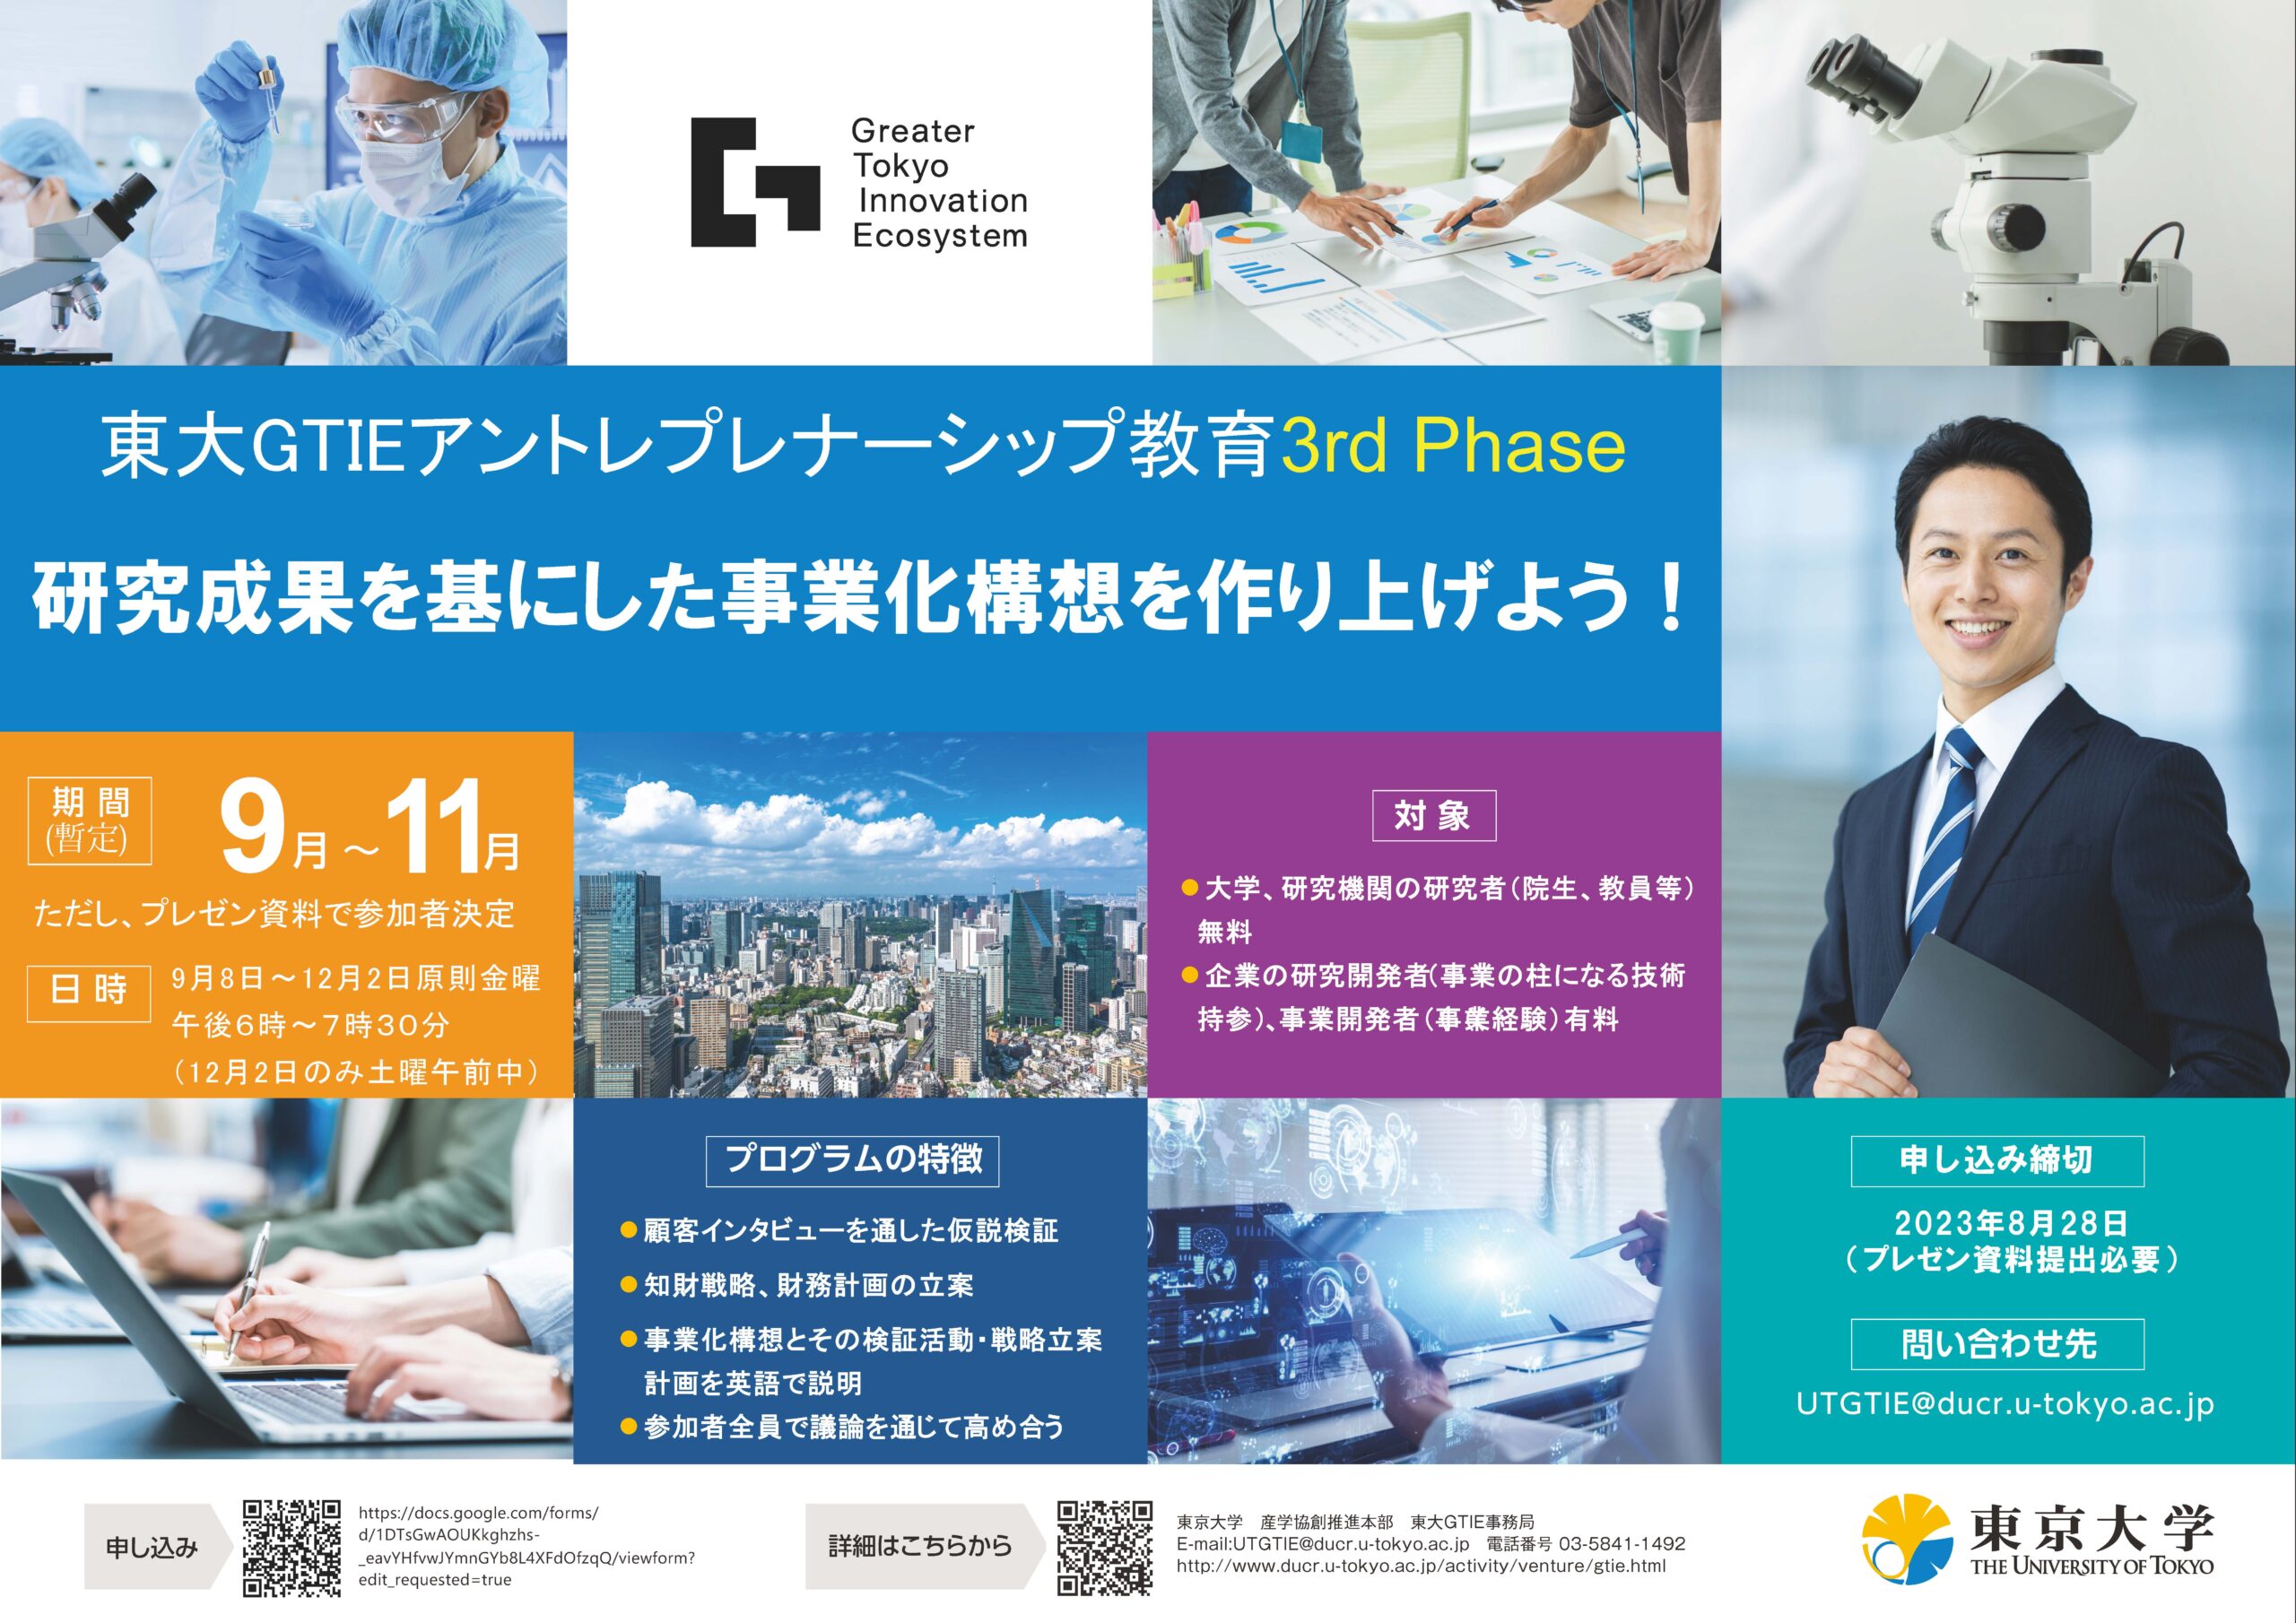 GTIE Entrepreneurship Education 3rd phase, University of Tokyo, Call for students